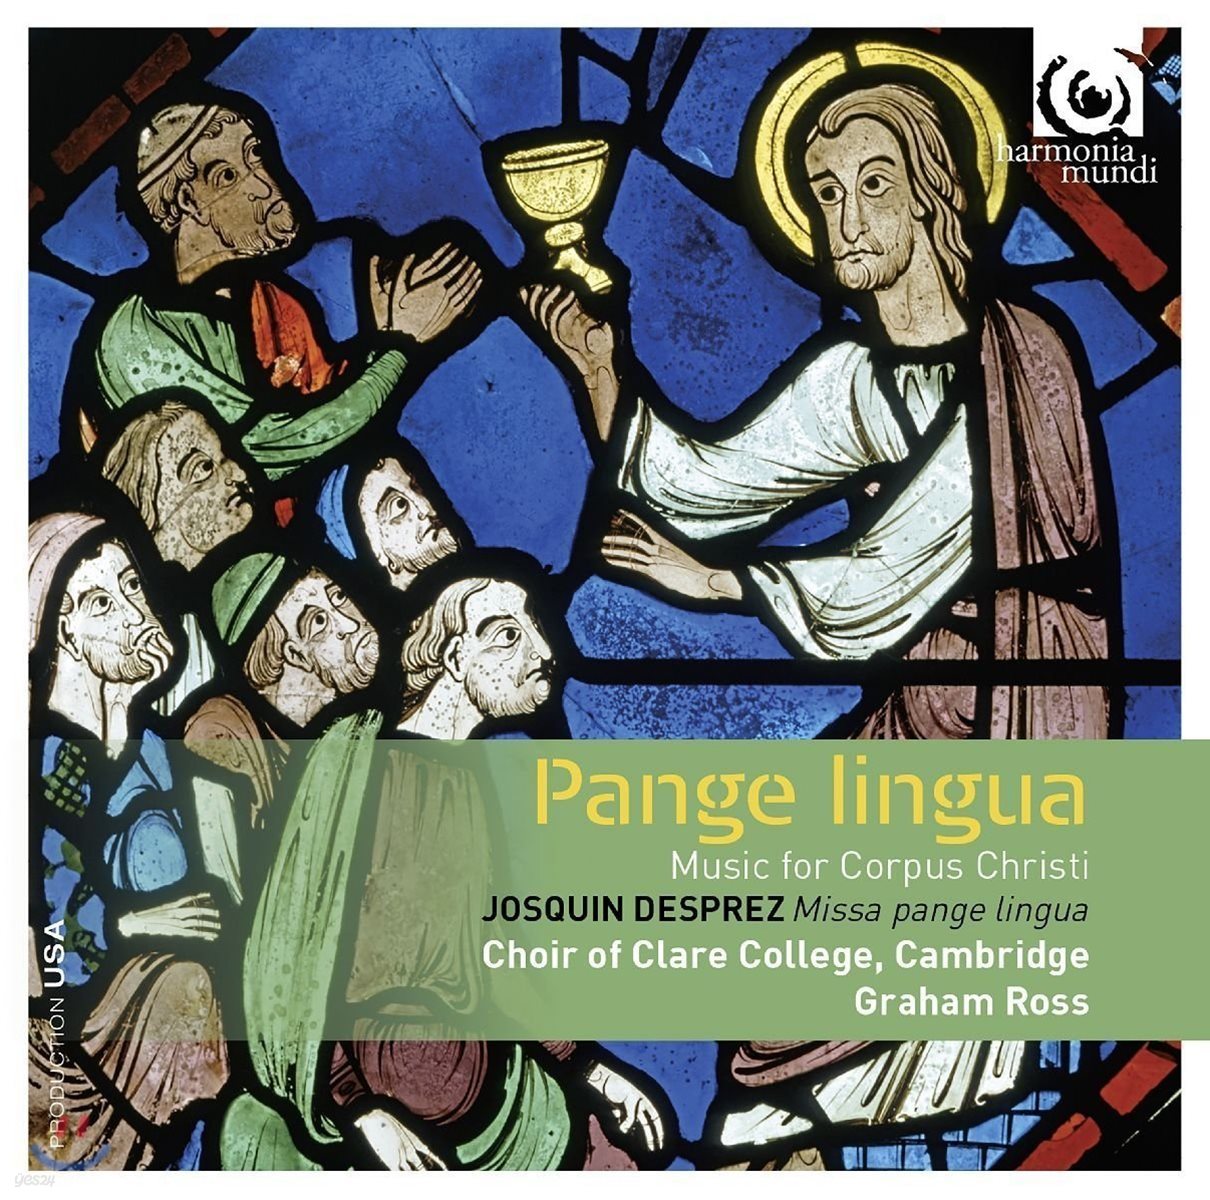 Choir of Clare College Cambridge 팡제 링구아 [찬미가] - 코퍼스 크리스티를 위한 음악 [성체 축일 음악] (Pange Lingua - Music for Corpus Christi) 캠브리지 클레어 컬리지 합창단